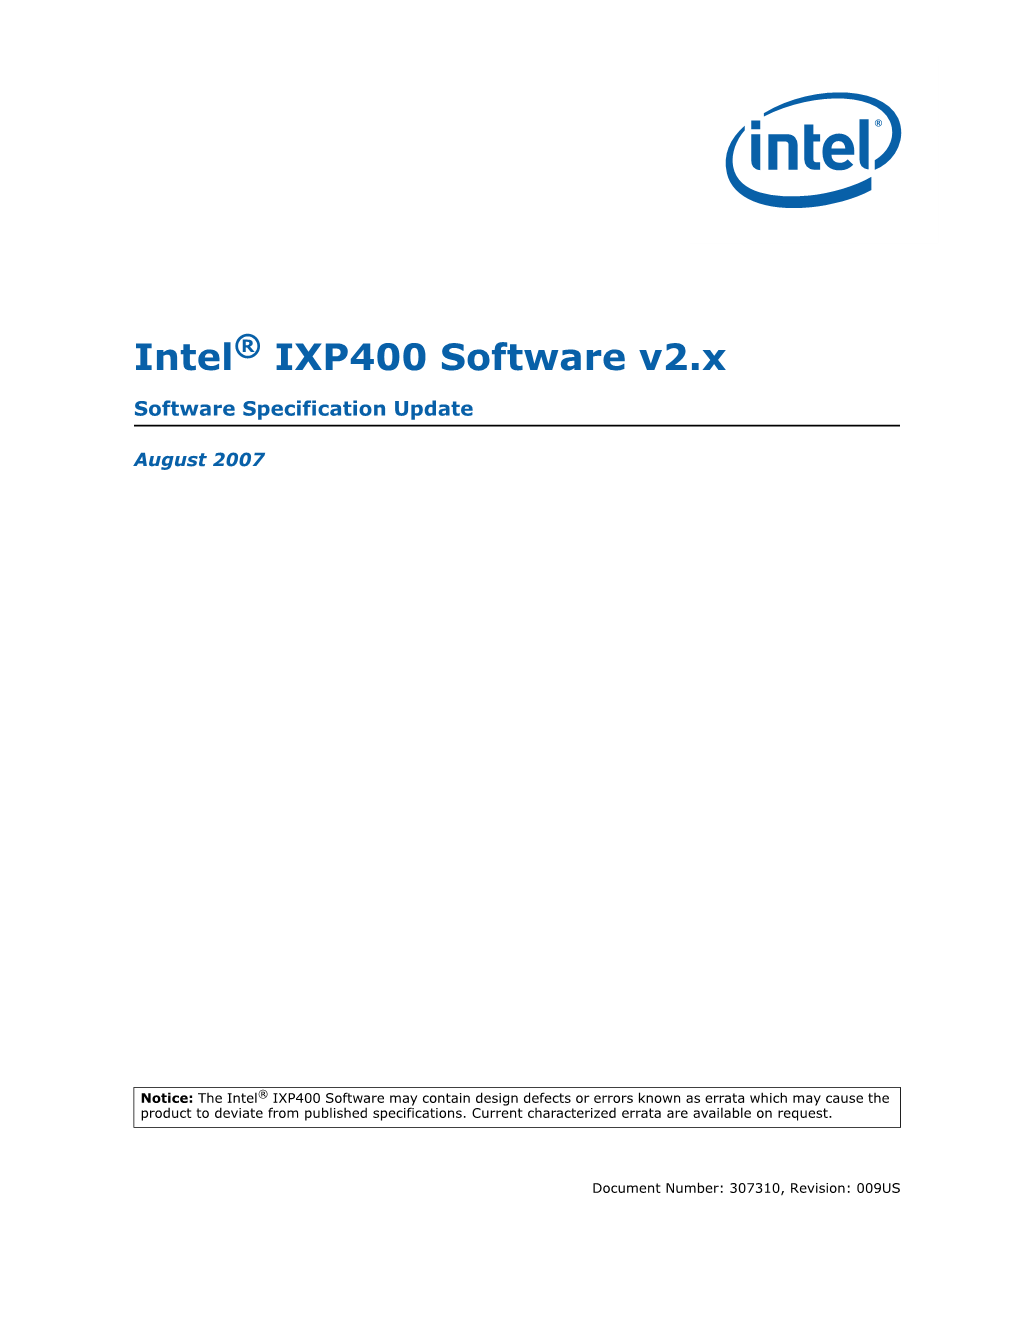 IXP400 Software V2.X